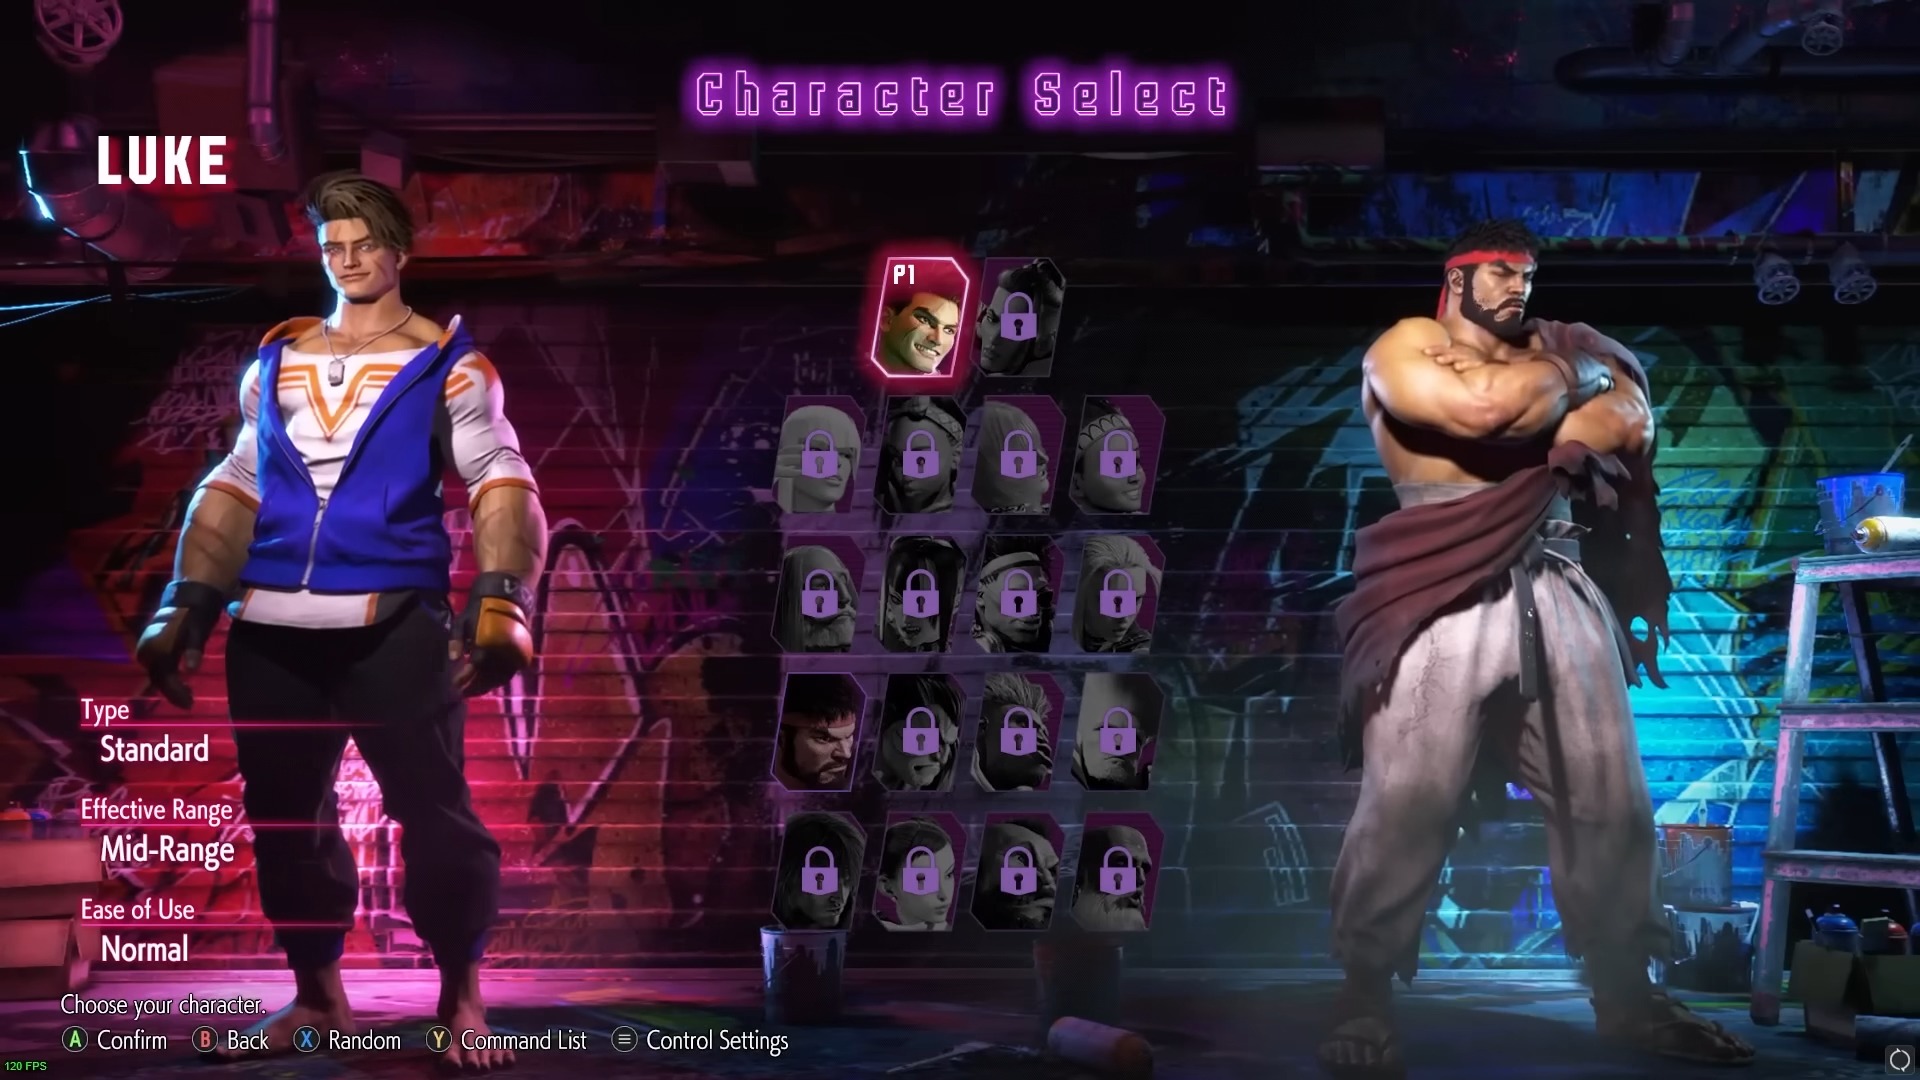 Street Fighter 6 